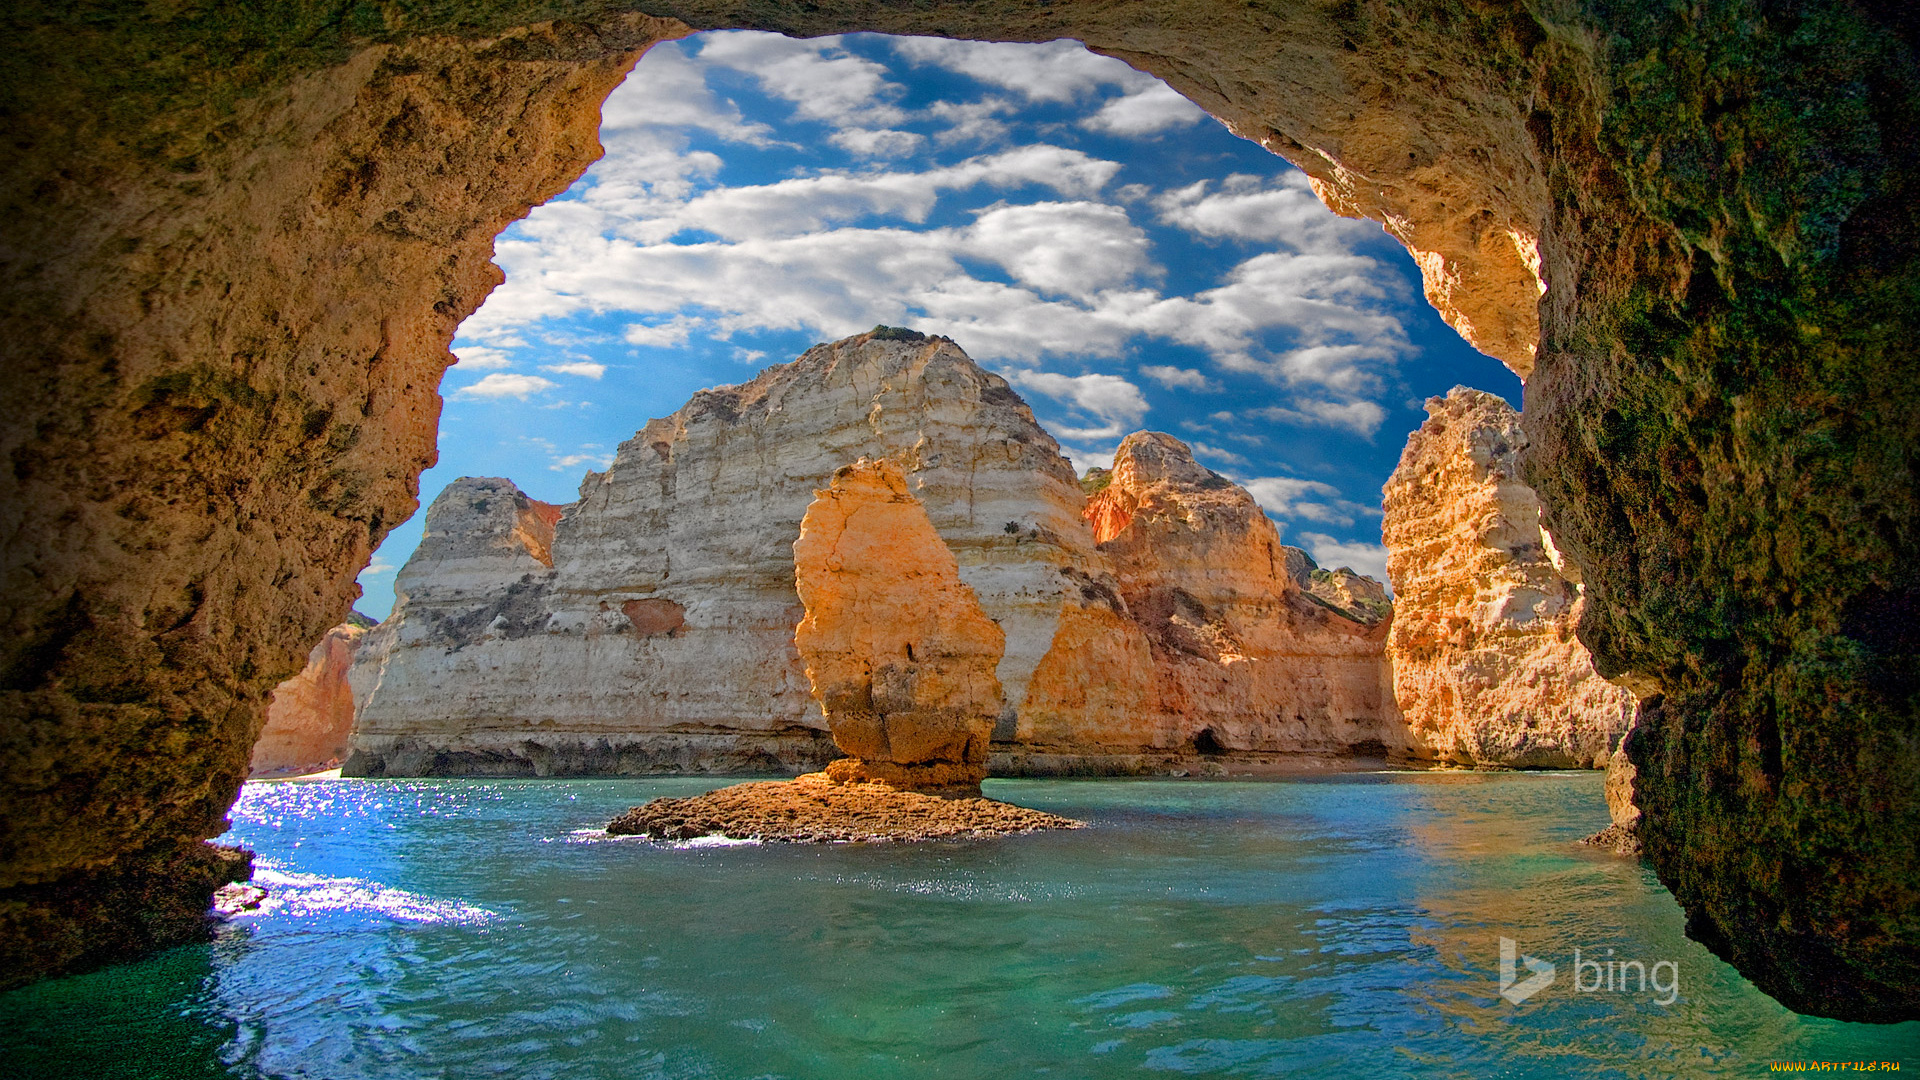 природа, побережье, понта-да-пьедаде, лагос, португалия, море, скалы, пещера, грот, арка, небо, облака